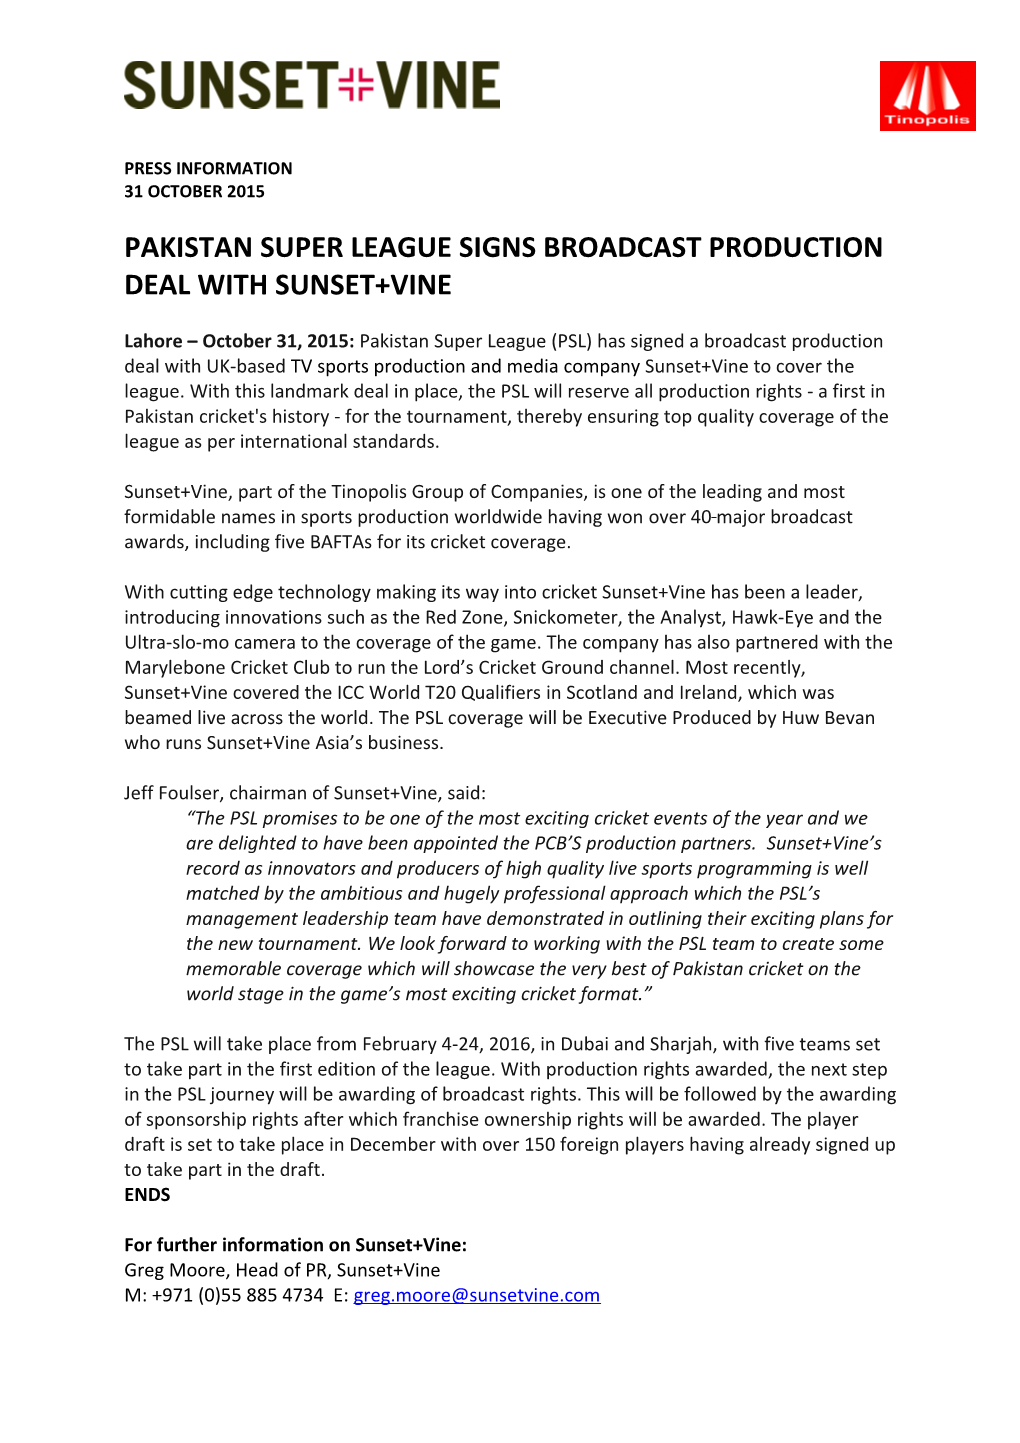 Pakistan Super League Signs Broadcast Production Deal with Sunset+Vine